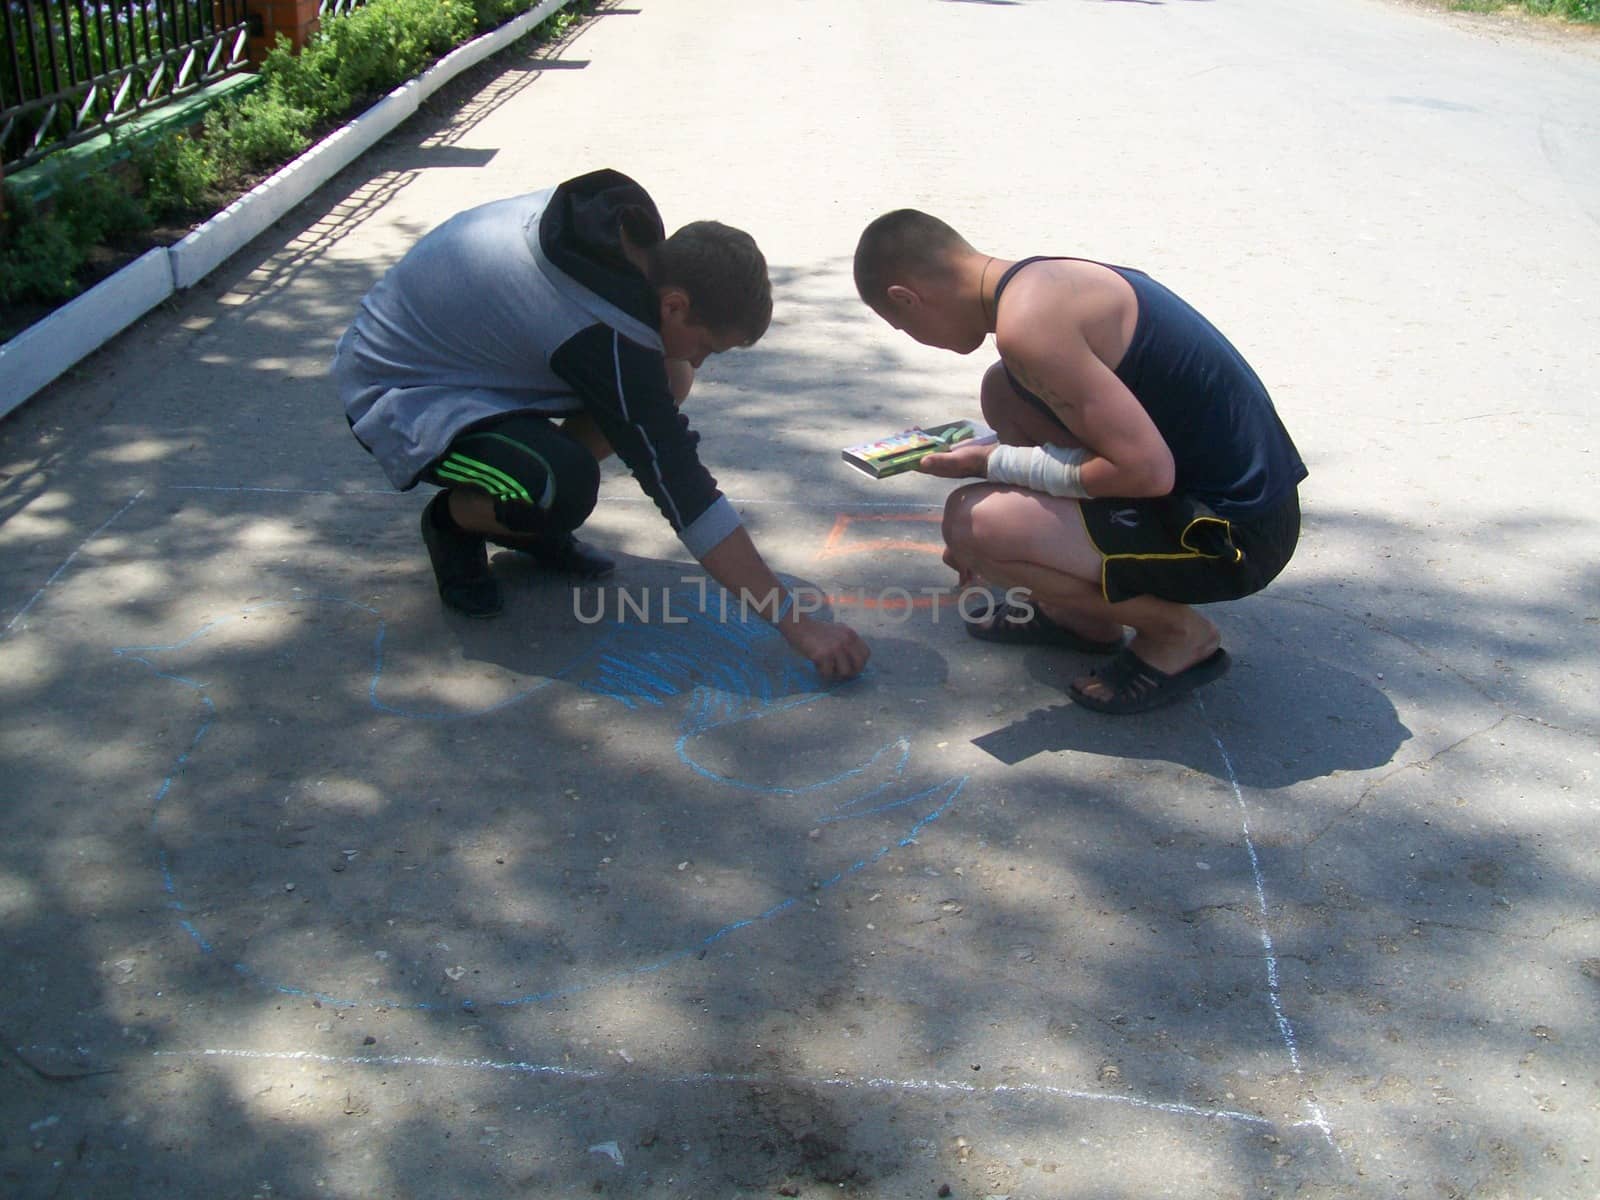 Children draw on the asphalt by vlad00mir